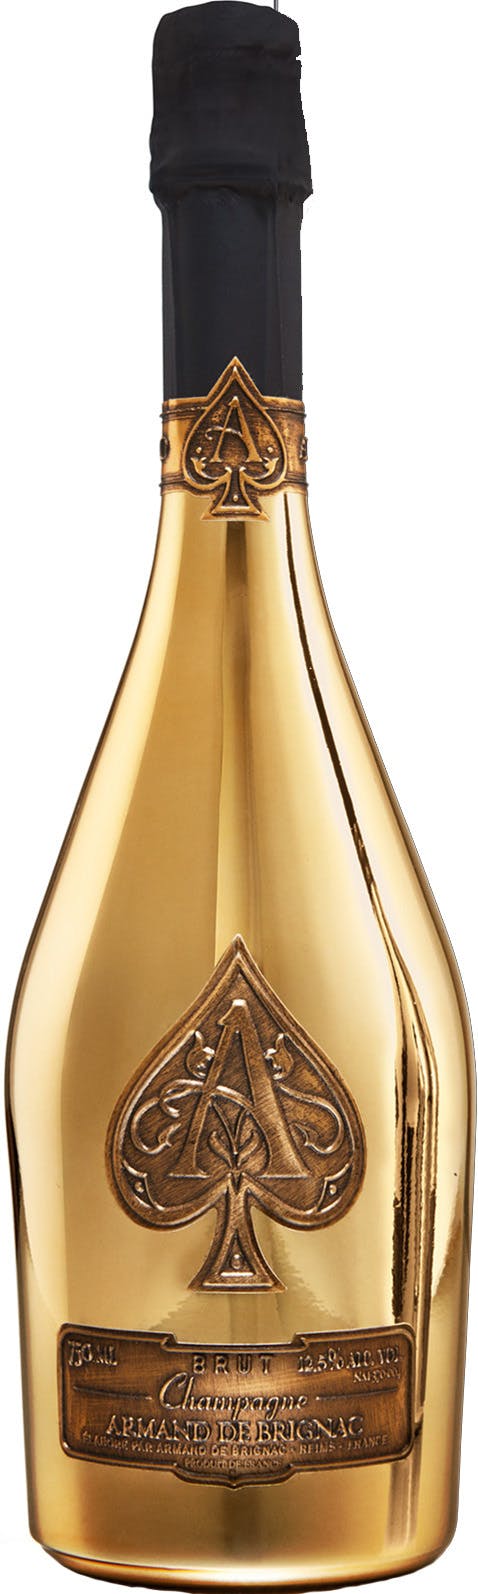 Armand de Brignac Ace of Spades Gold Brut, Champagne, France (1.5L